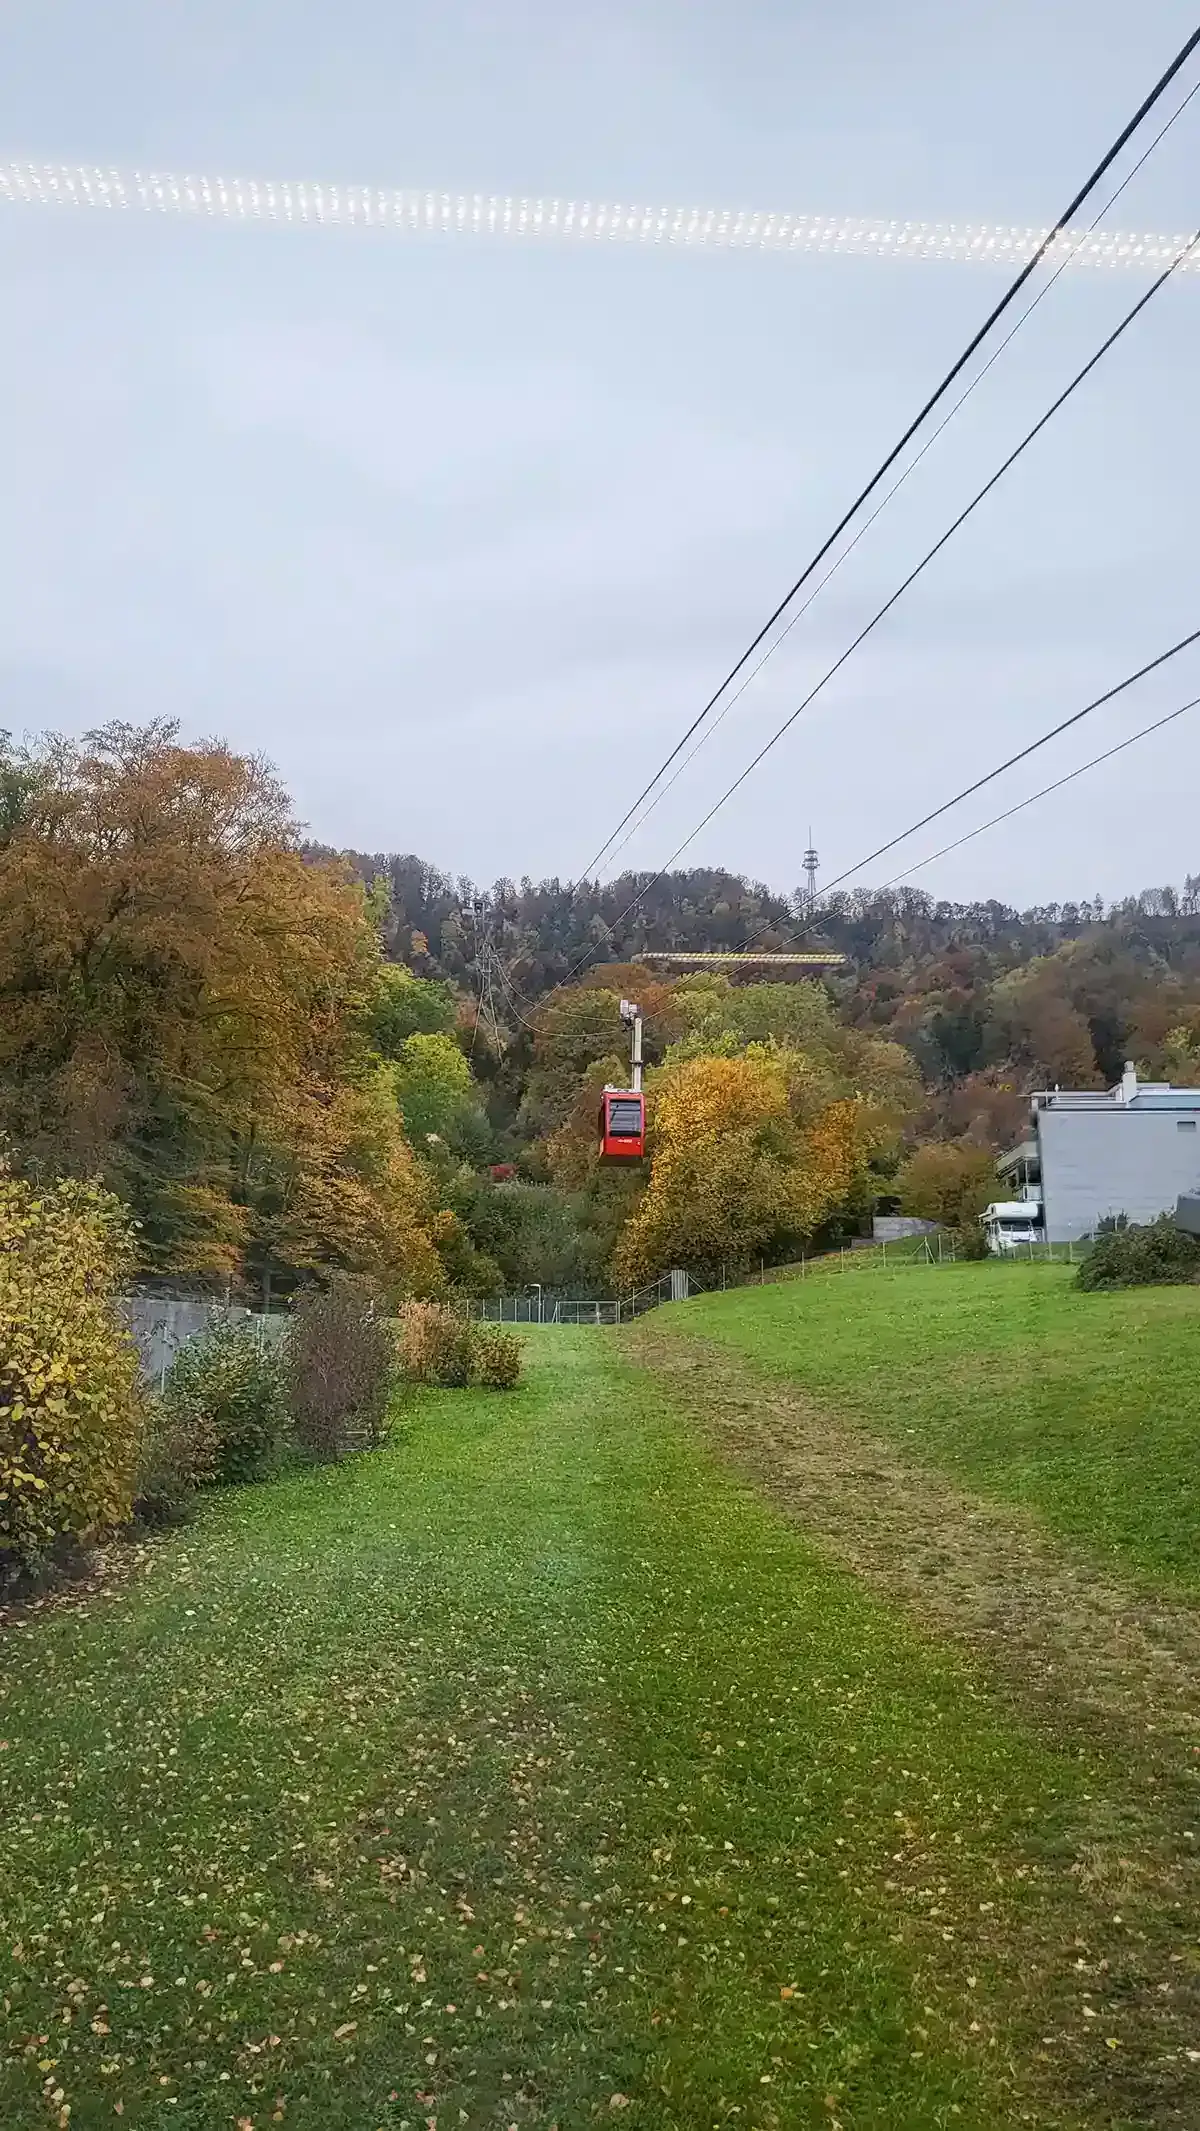 Adliswil-Felsenegg Cable Car, Zurich